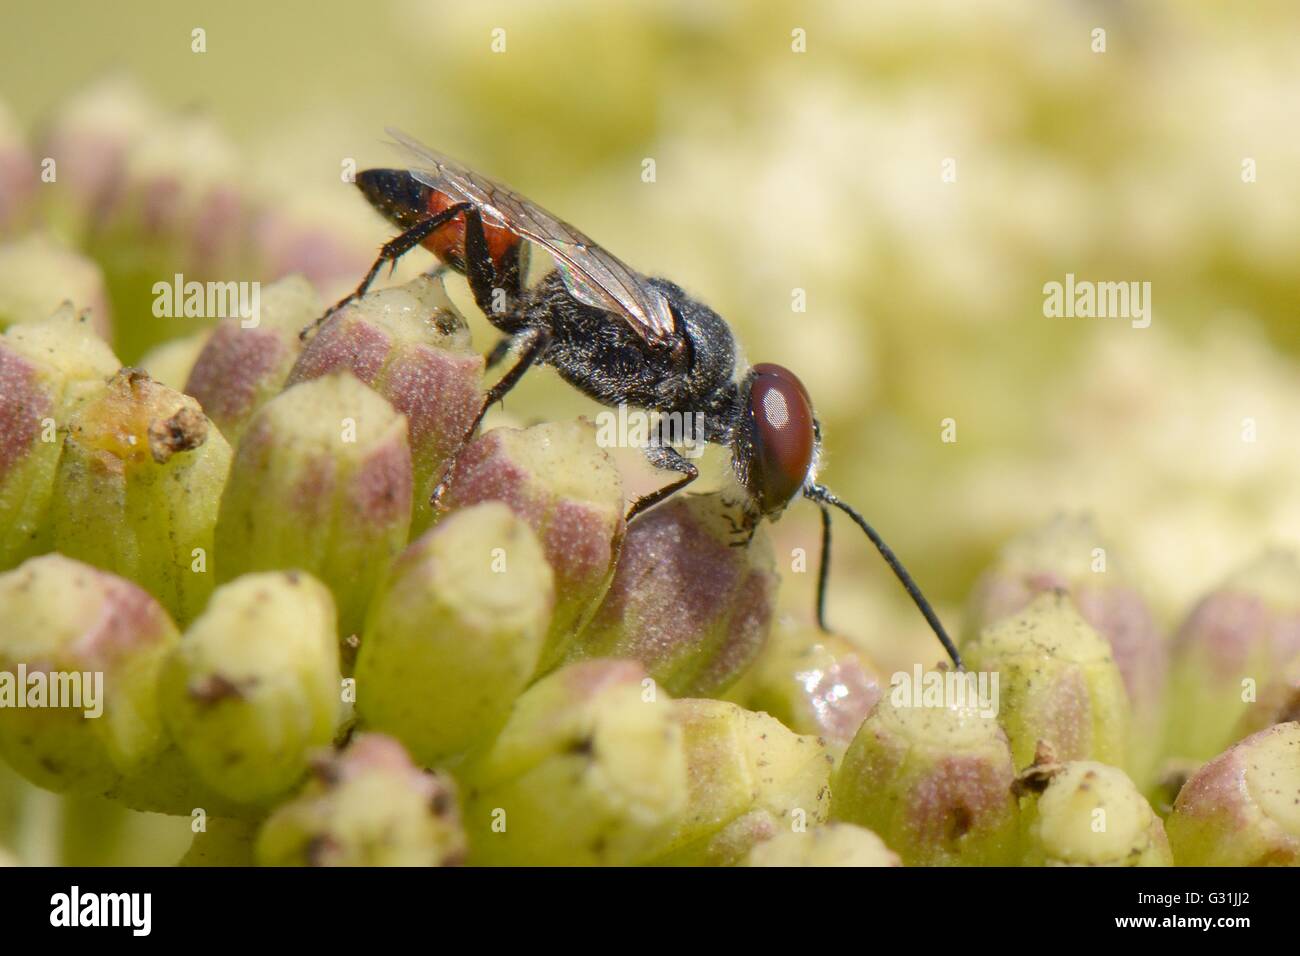 Crabronid wasp (Astata cf. boops), a predator of shield bugs feeding on Rock samphire flowers (Crithmum maritimum), Portugal. Stock Photo